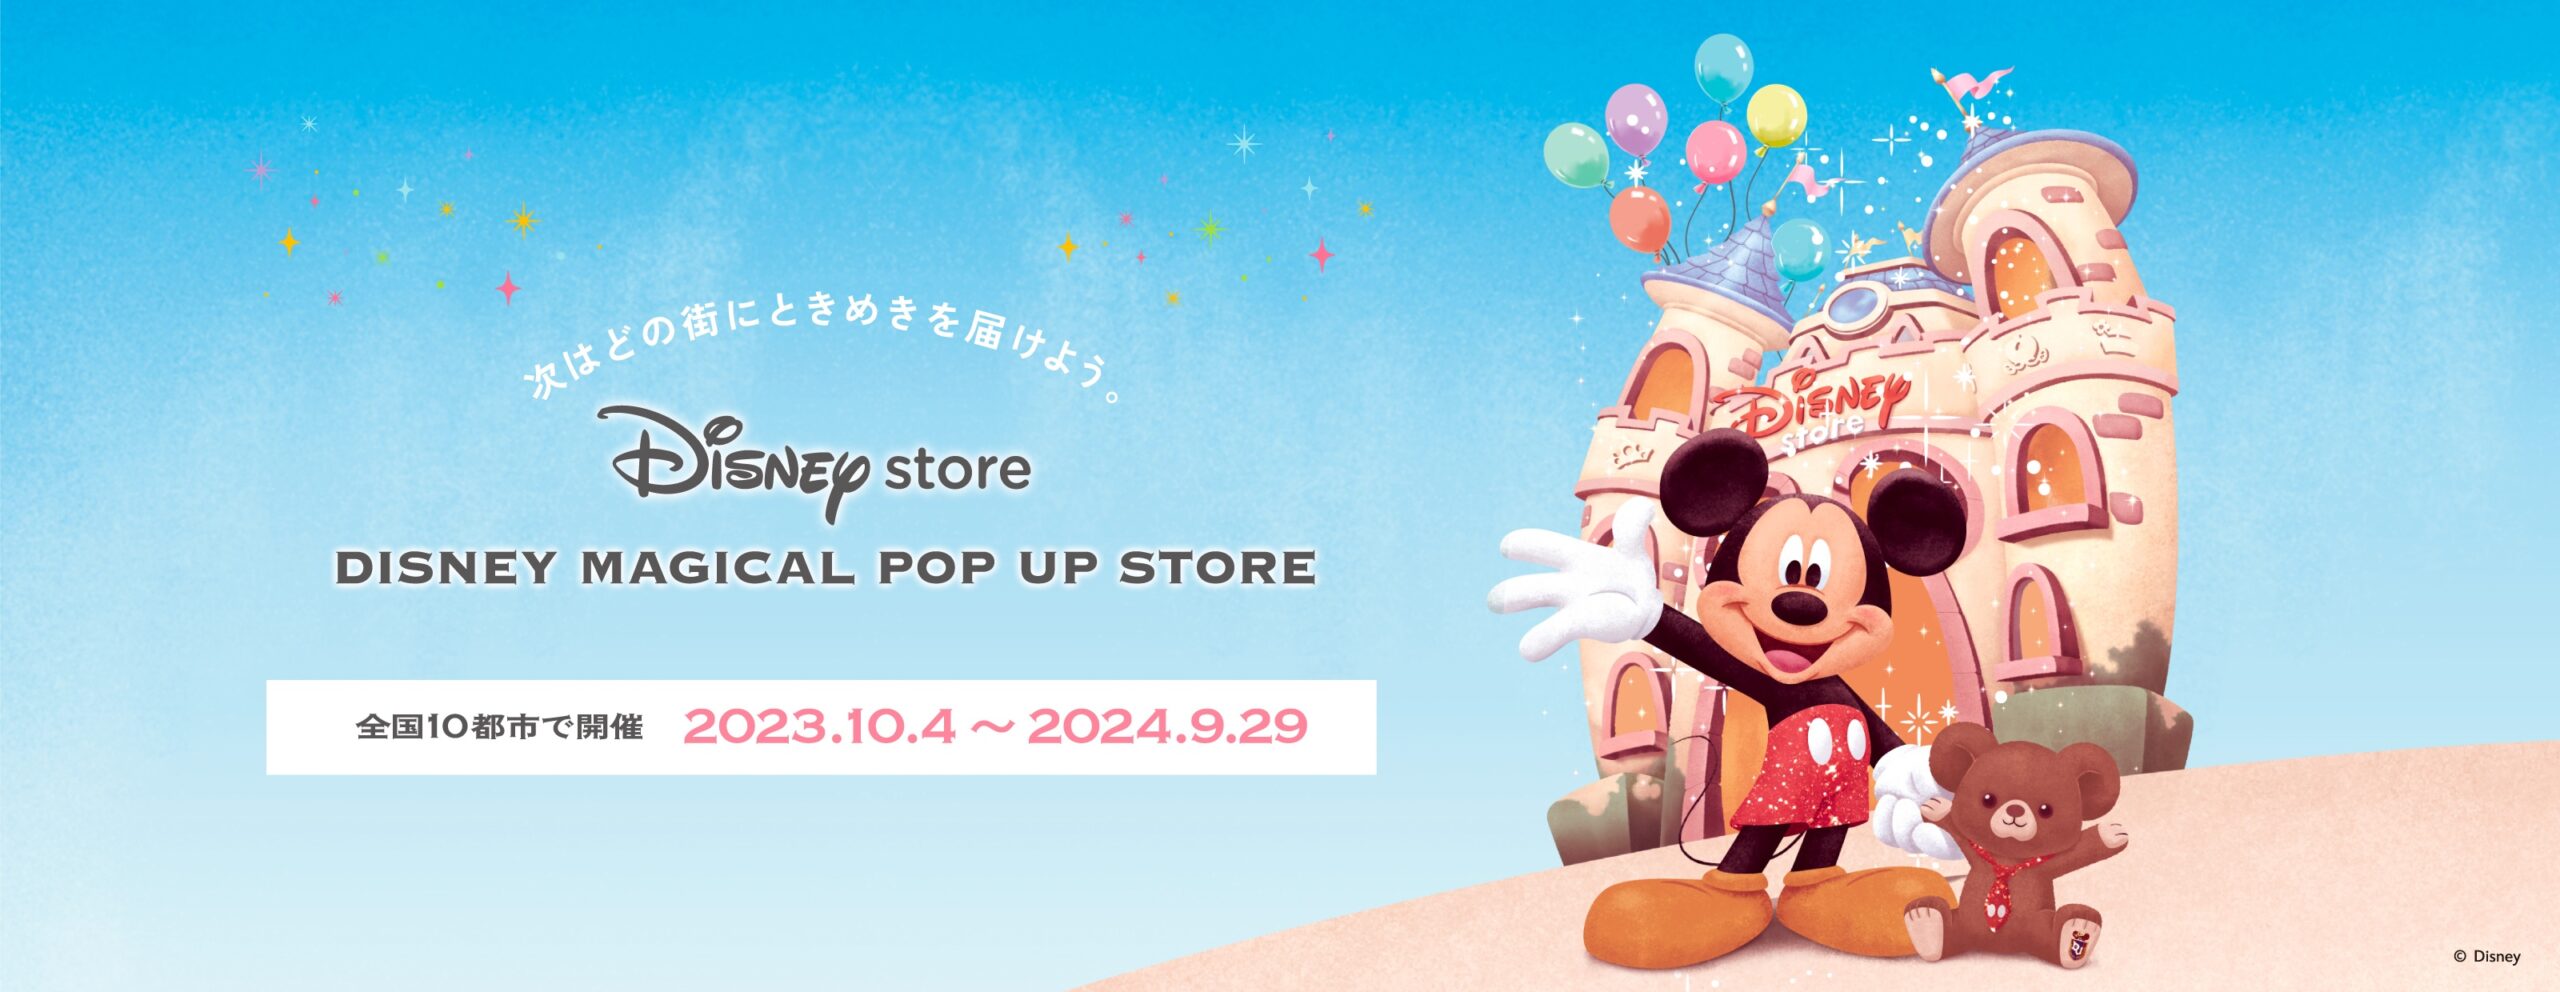 Disney Store Disney Magical Pop Up Store.